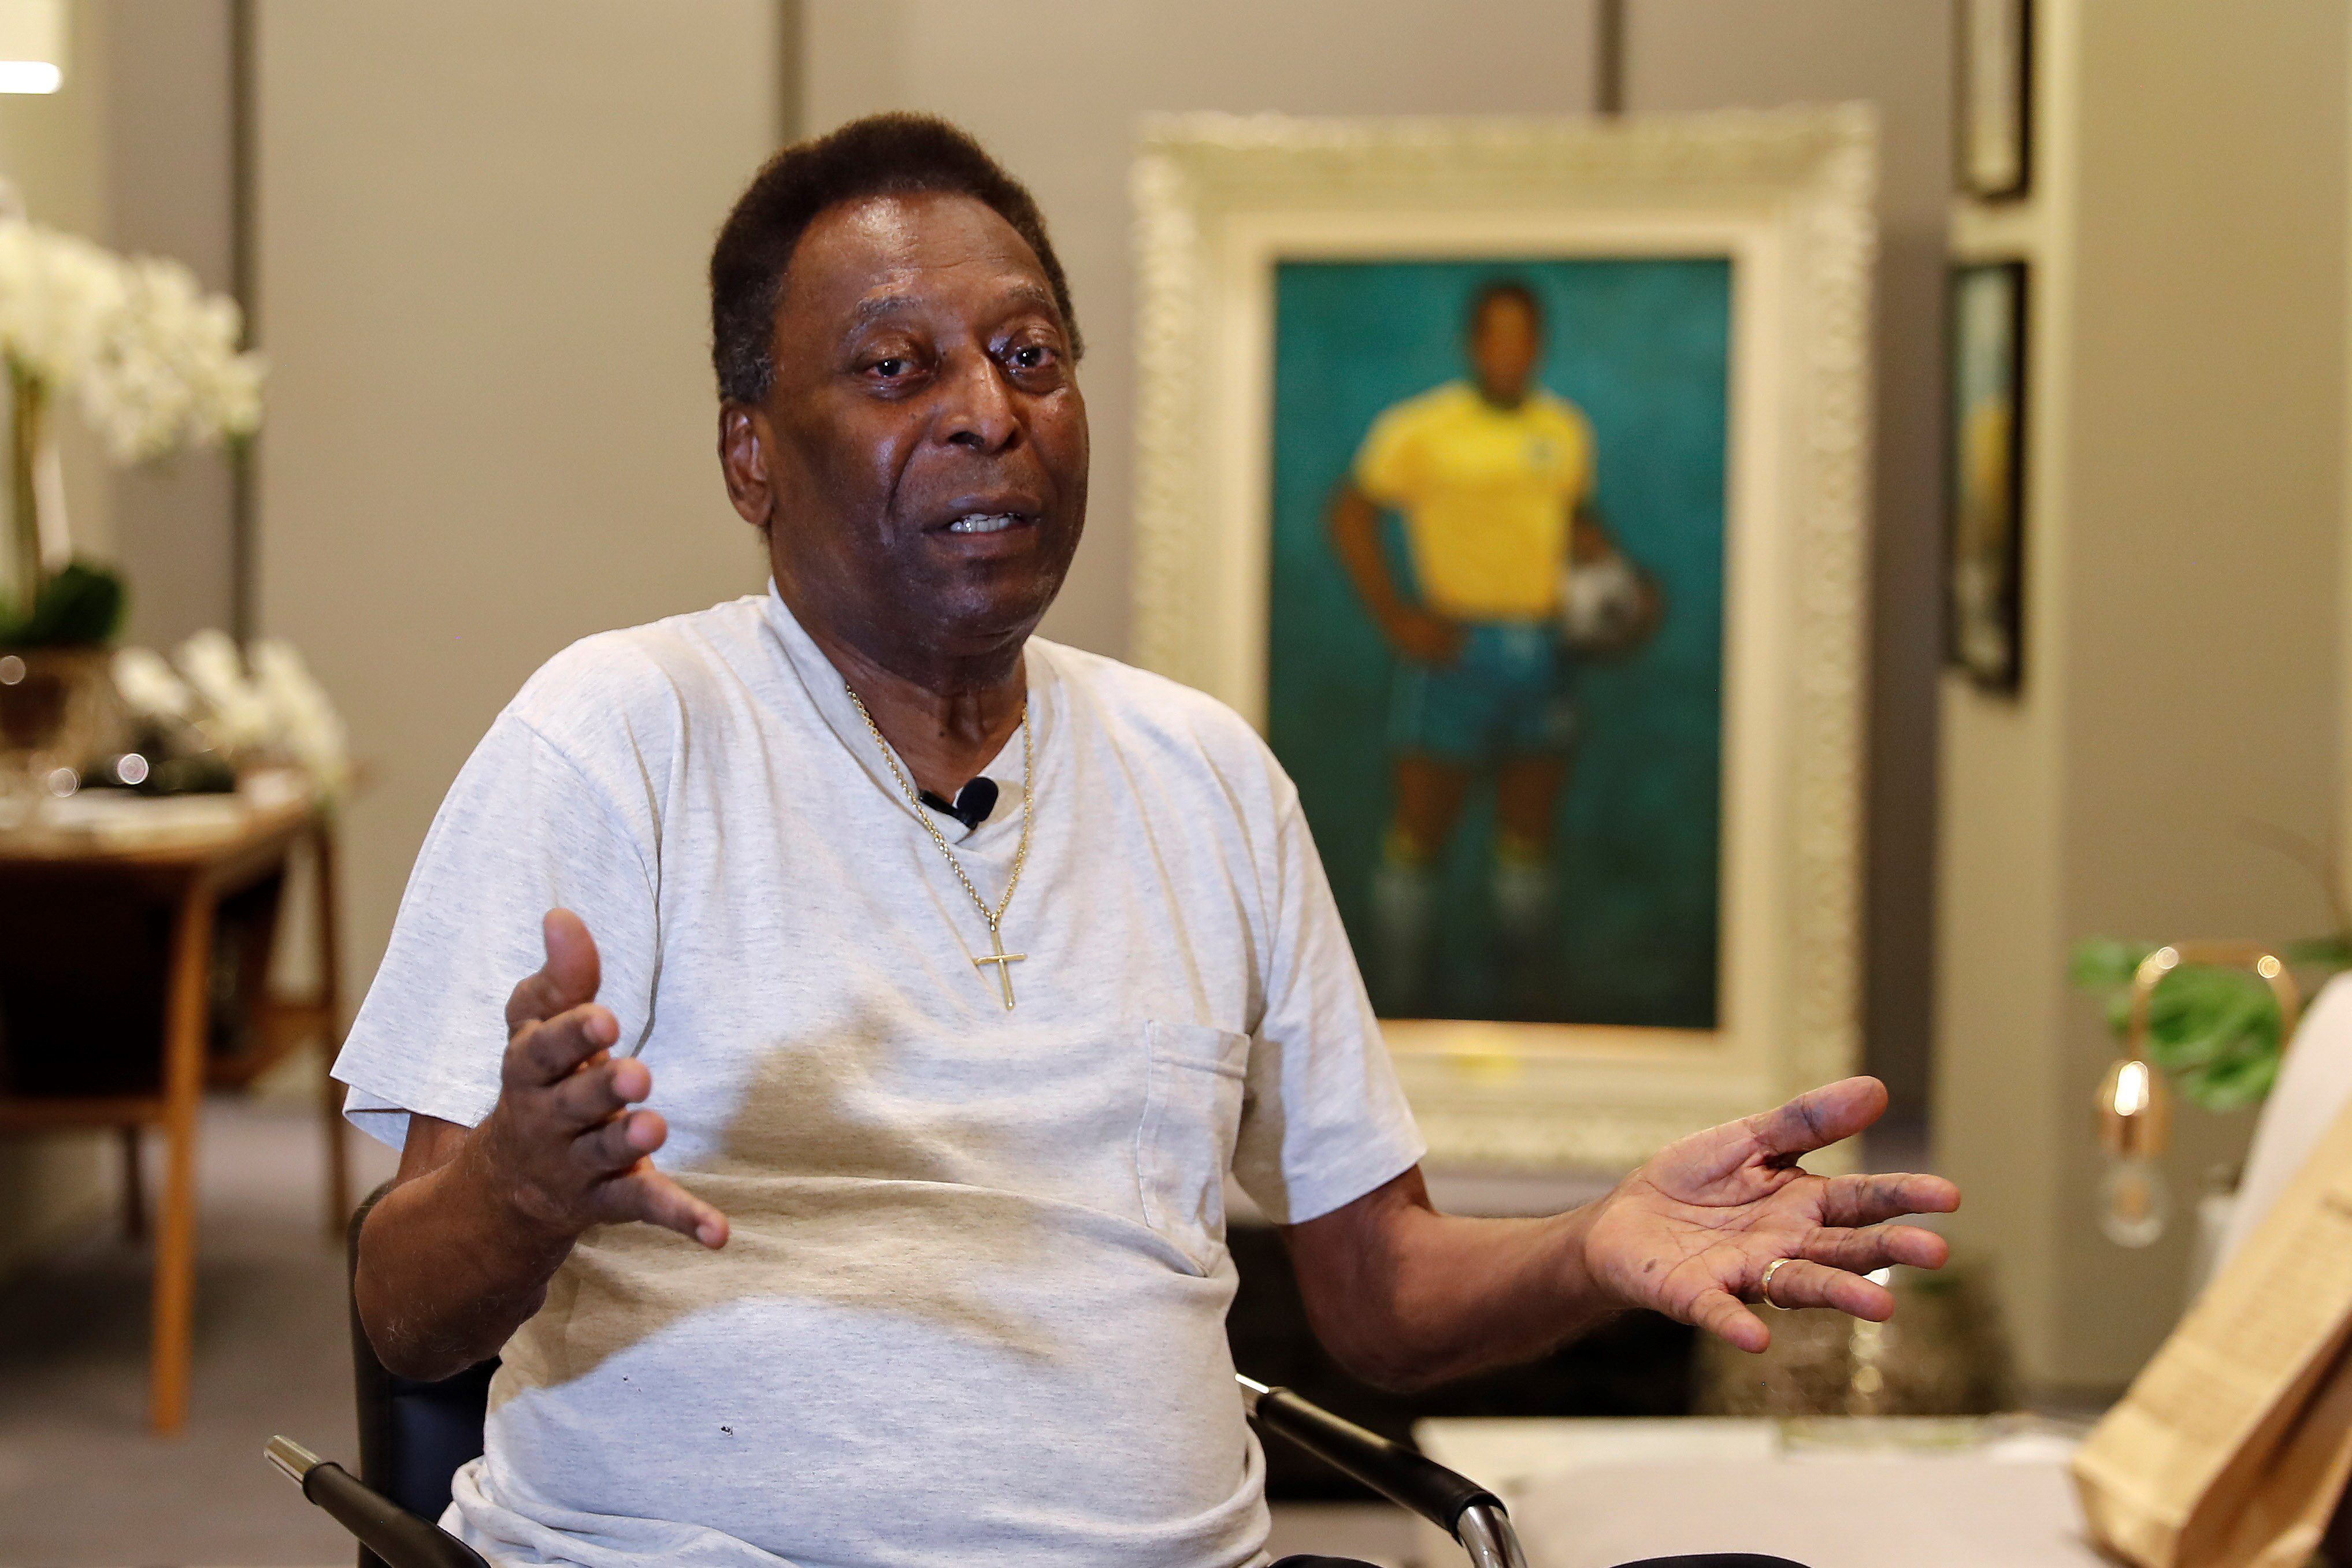 El emotivo mensaje de Kylian Mbappé hacia Pelé